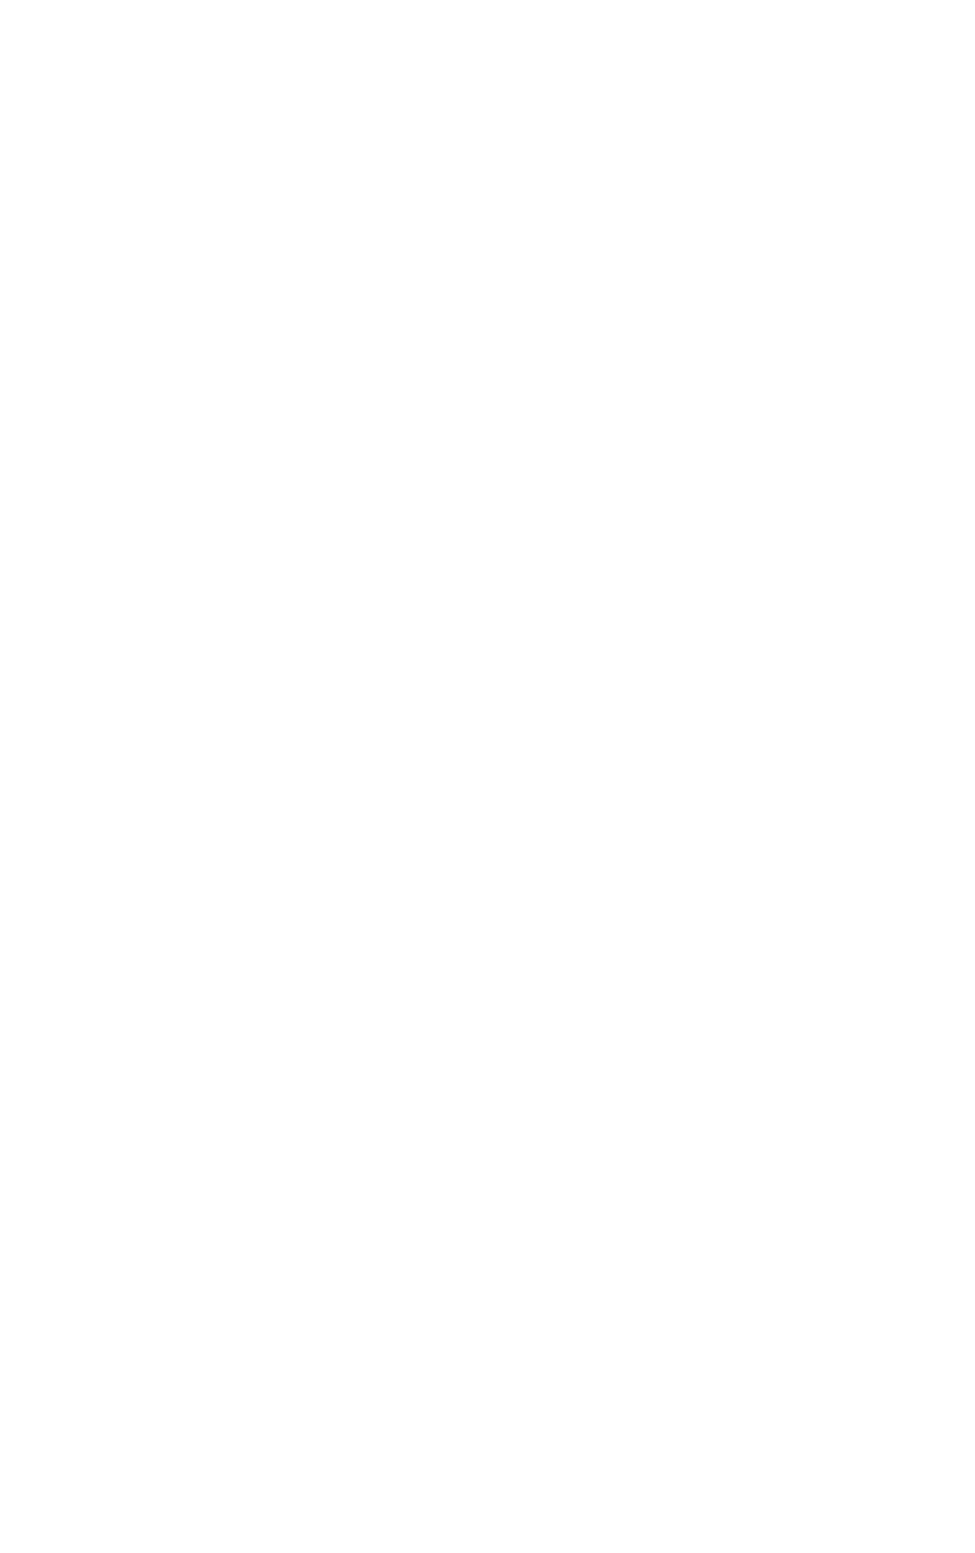 Ohmyhome logo pour fonds sombres (PNG transparent)